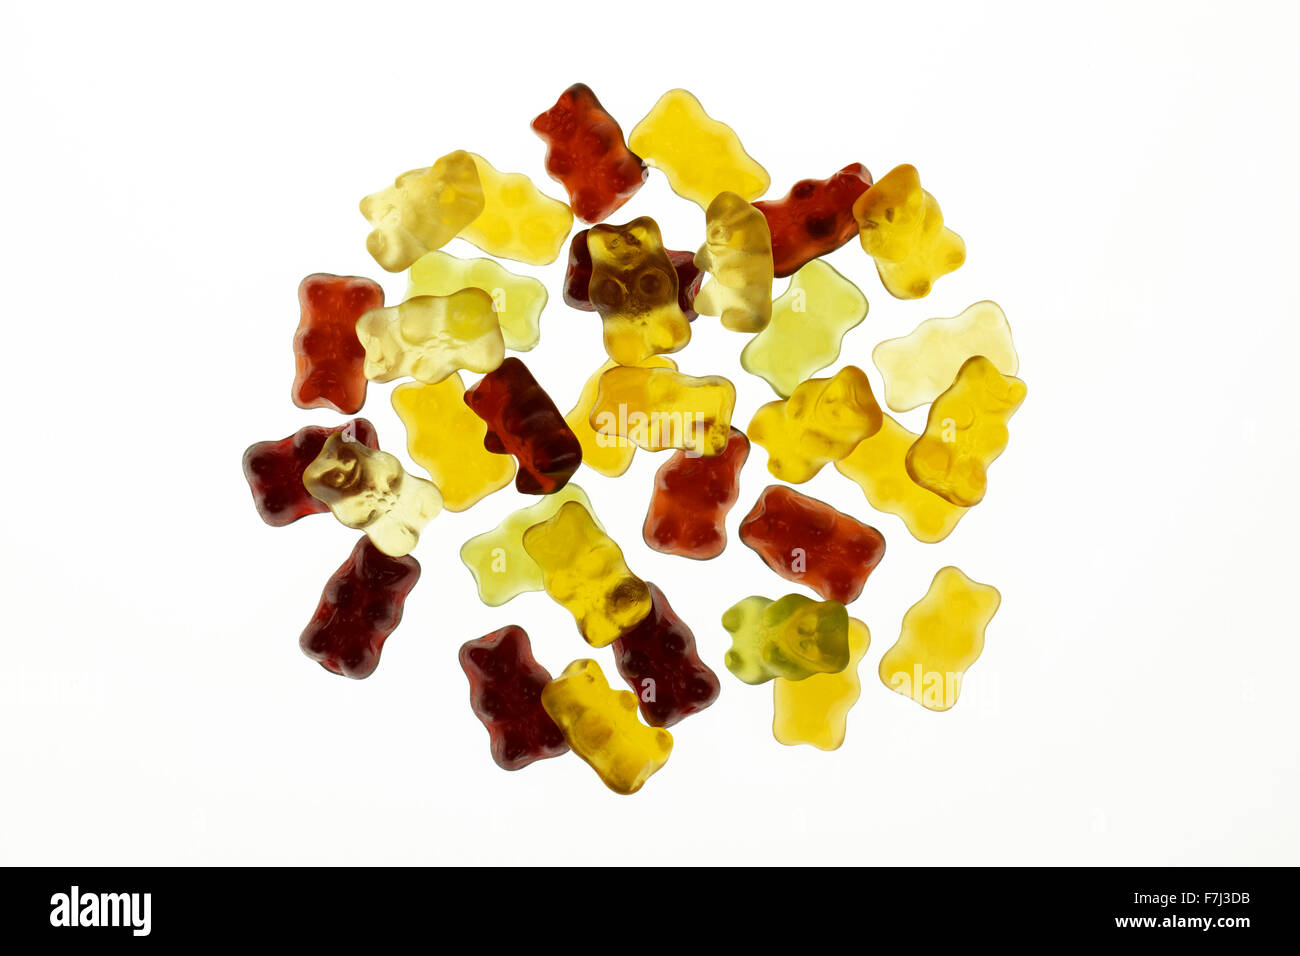 Gummy Bears sweets, Germany Stock Photo